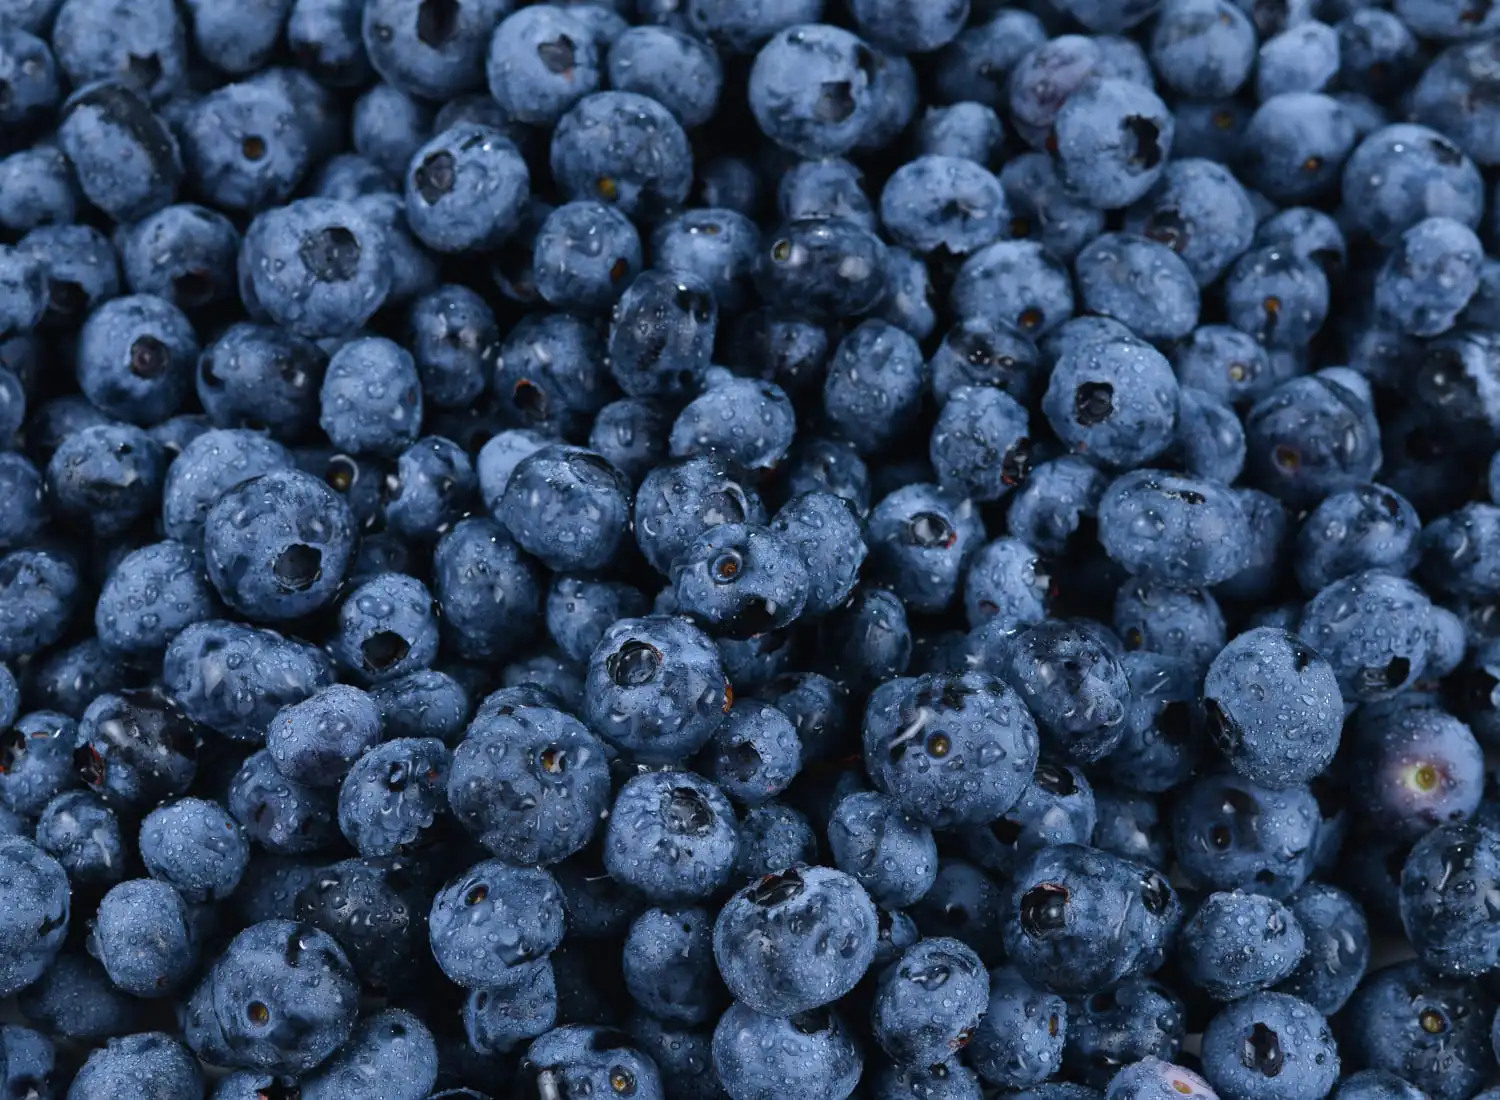 Health beneifts of blueberries